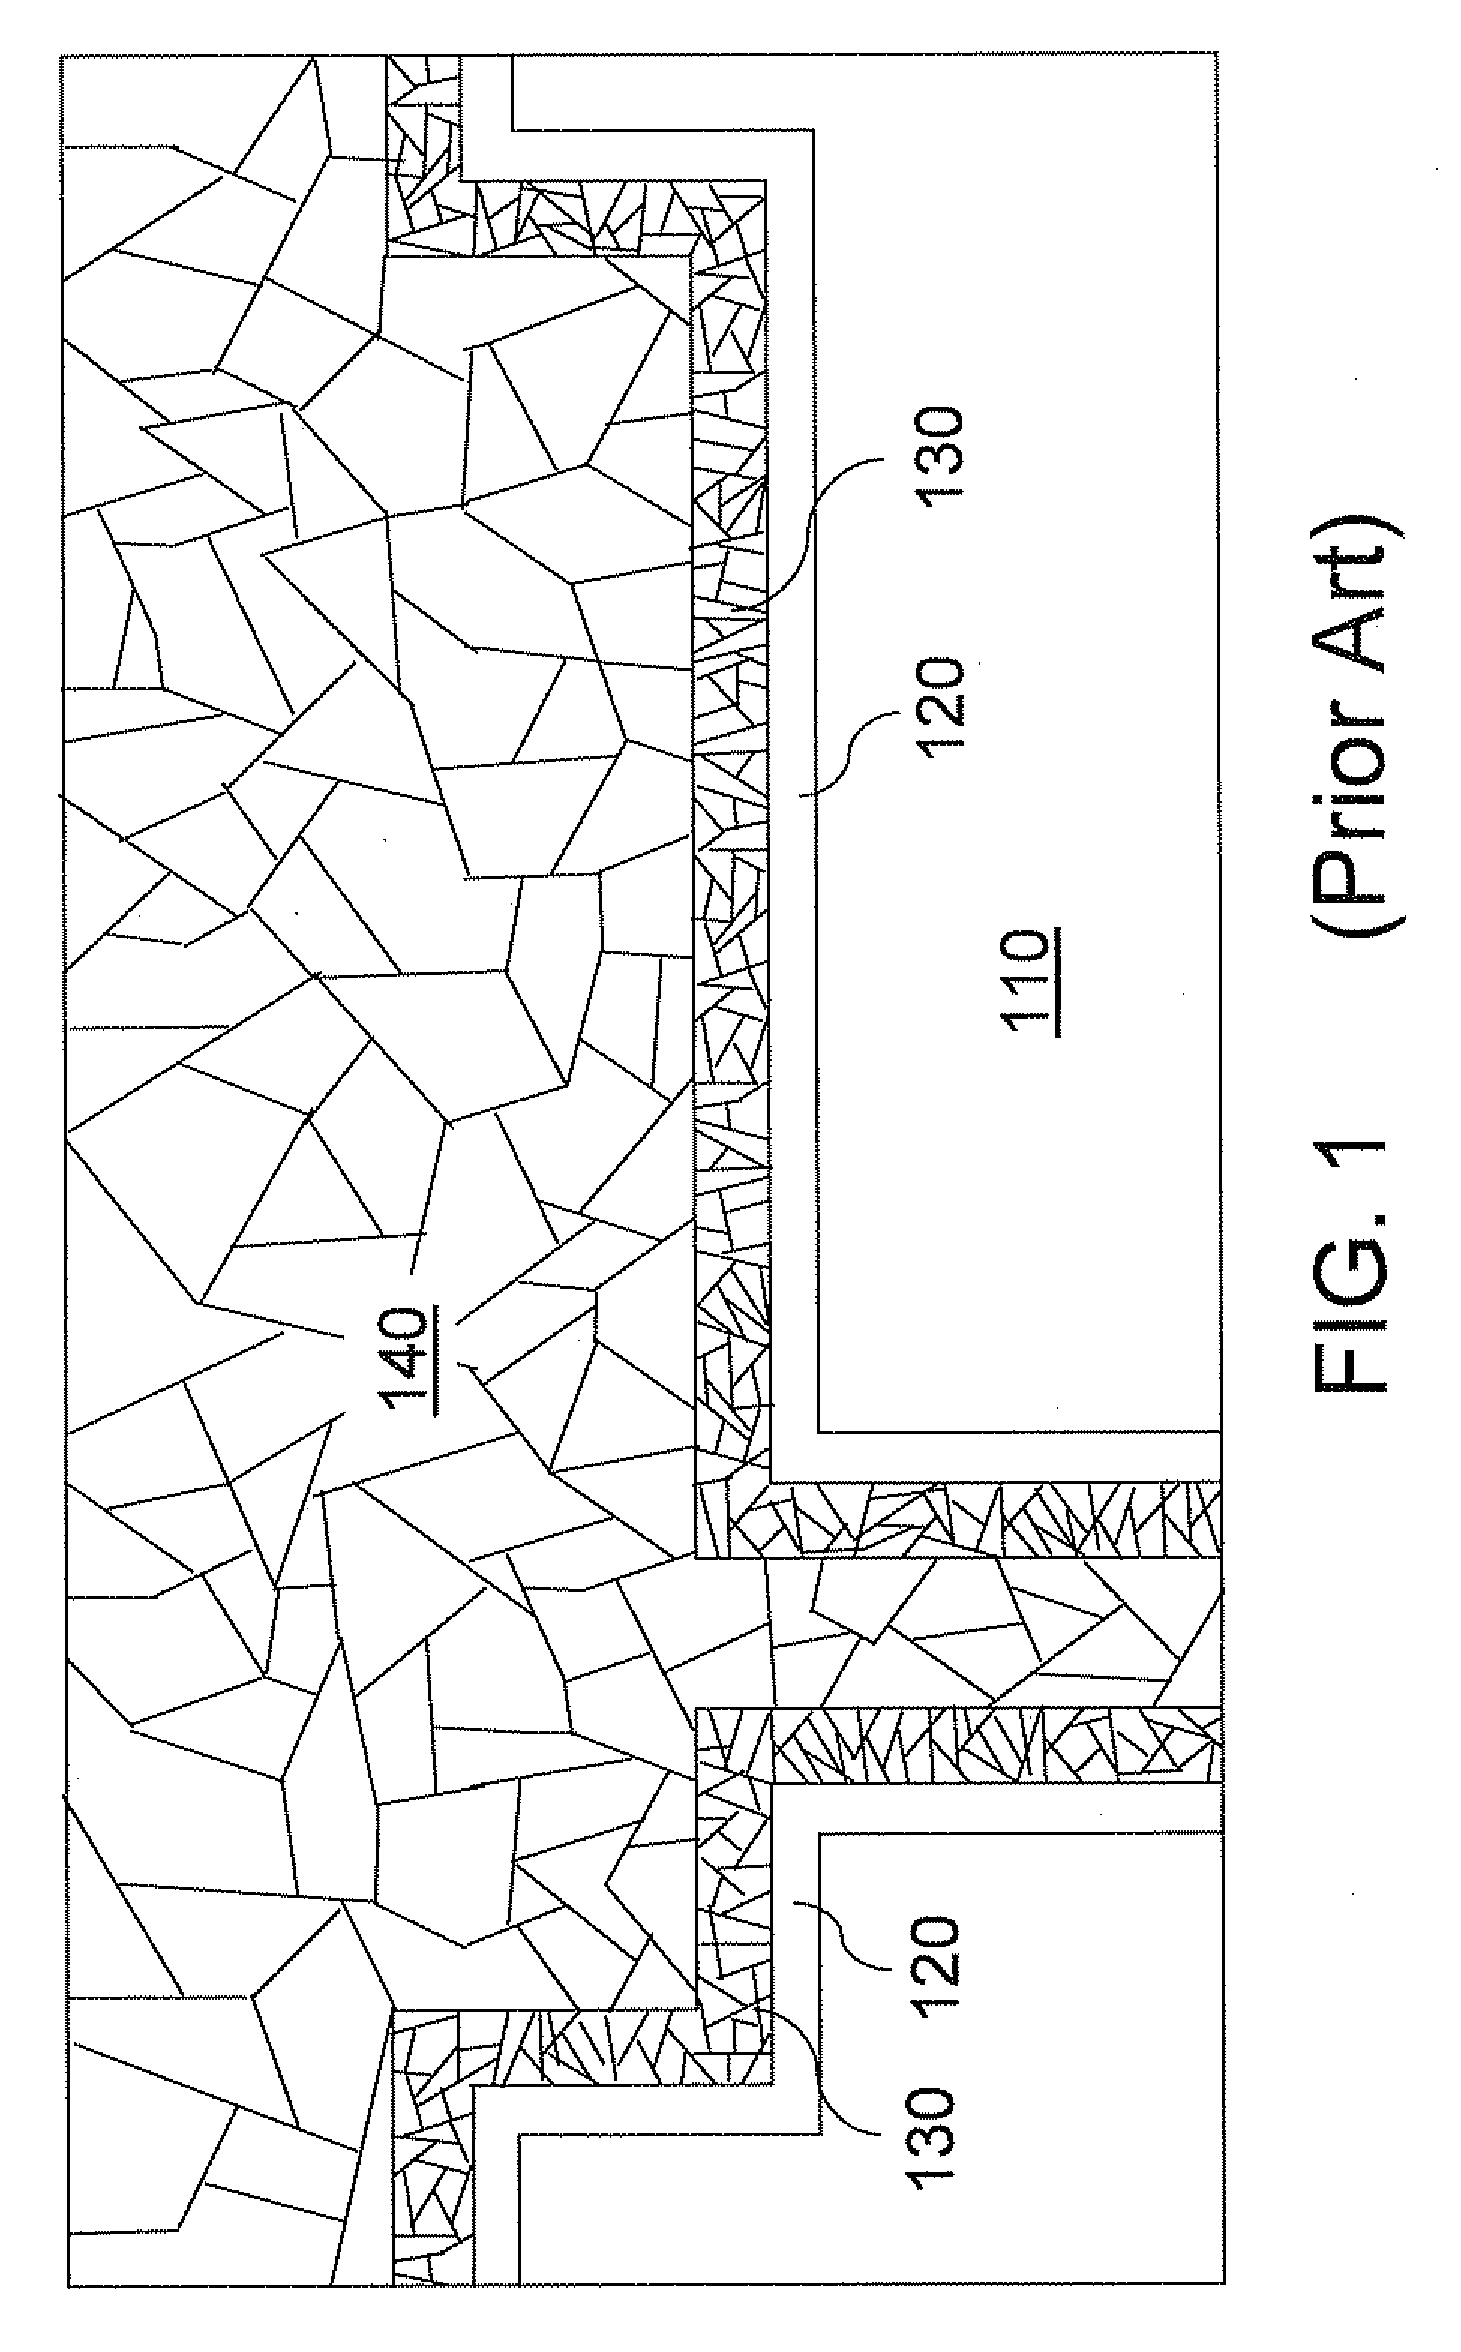 Microstructure modification in copper interconnect structure